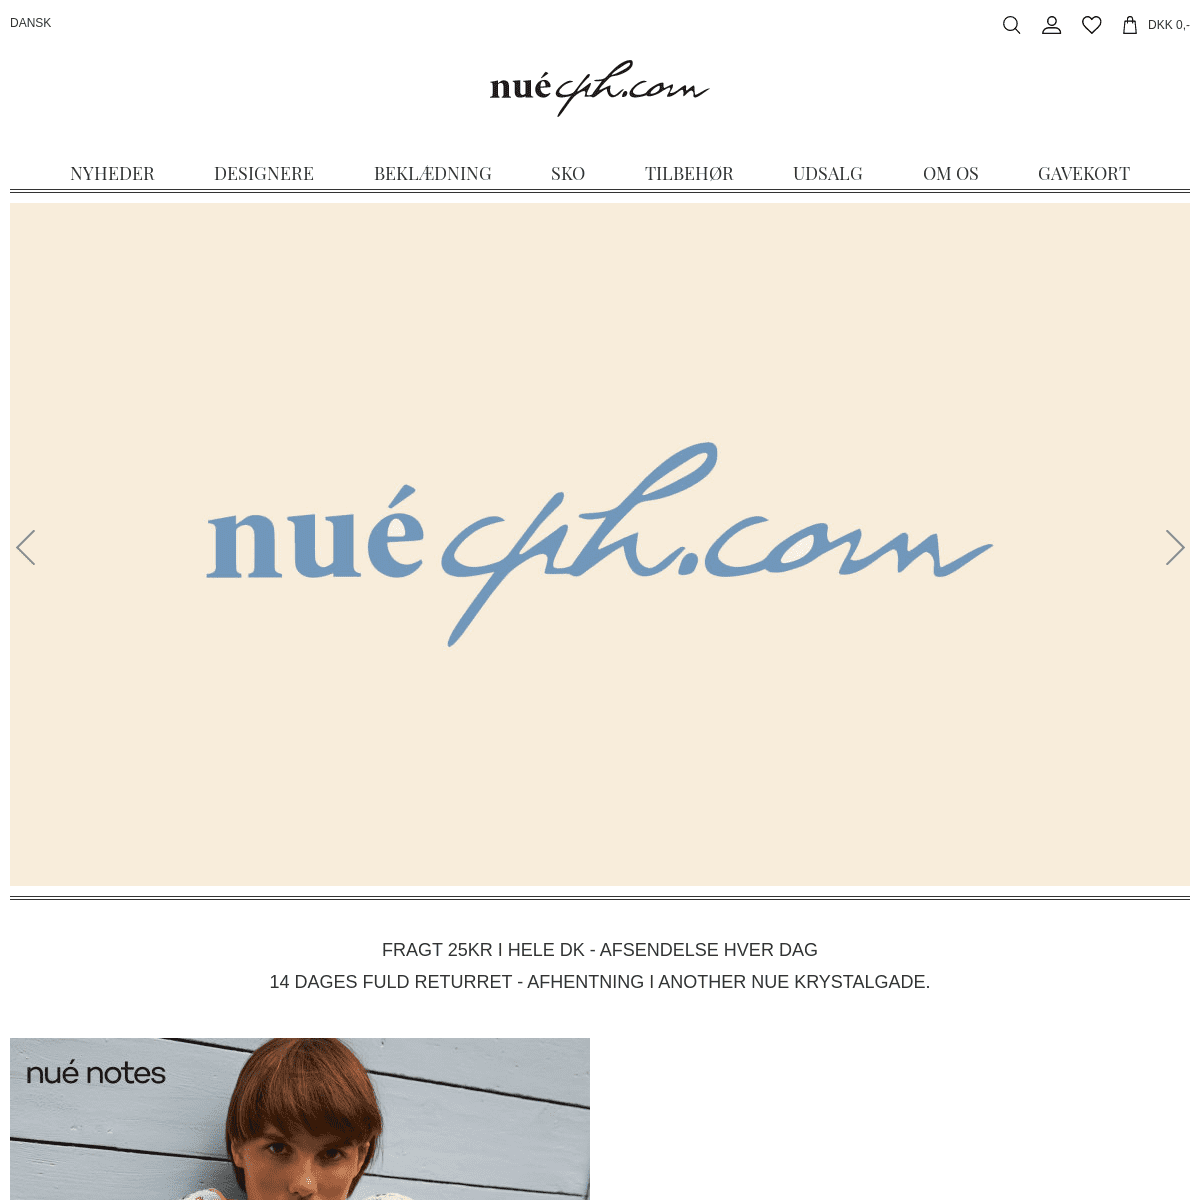 A complete backup of nuecph.com